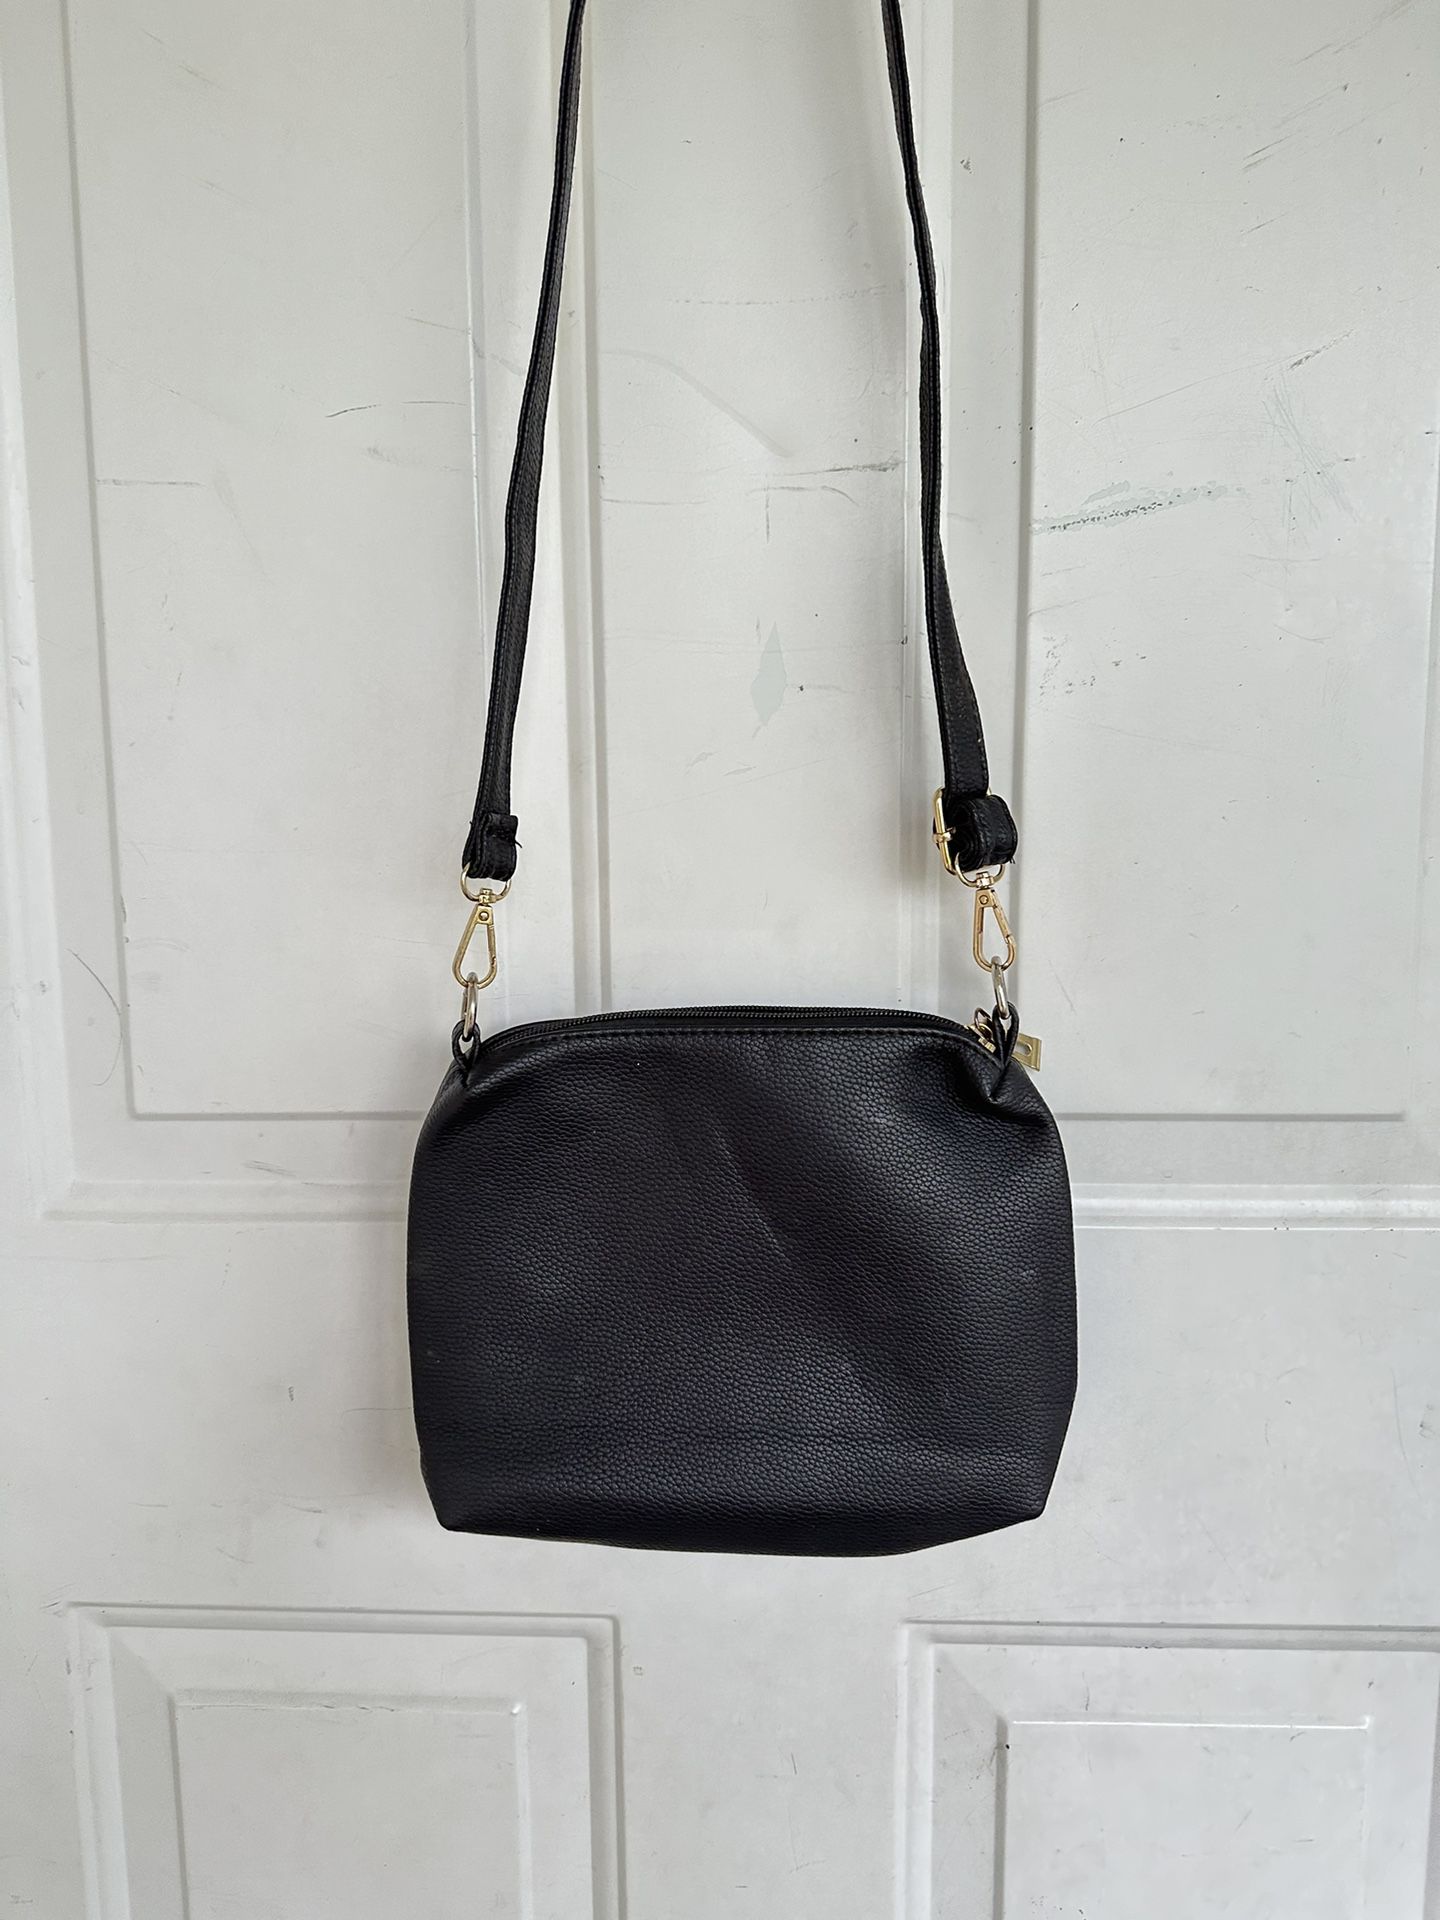 Black Crossbody Bag Small Handbag Purse 